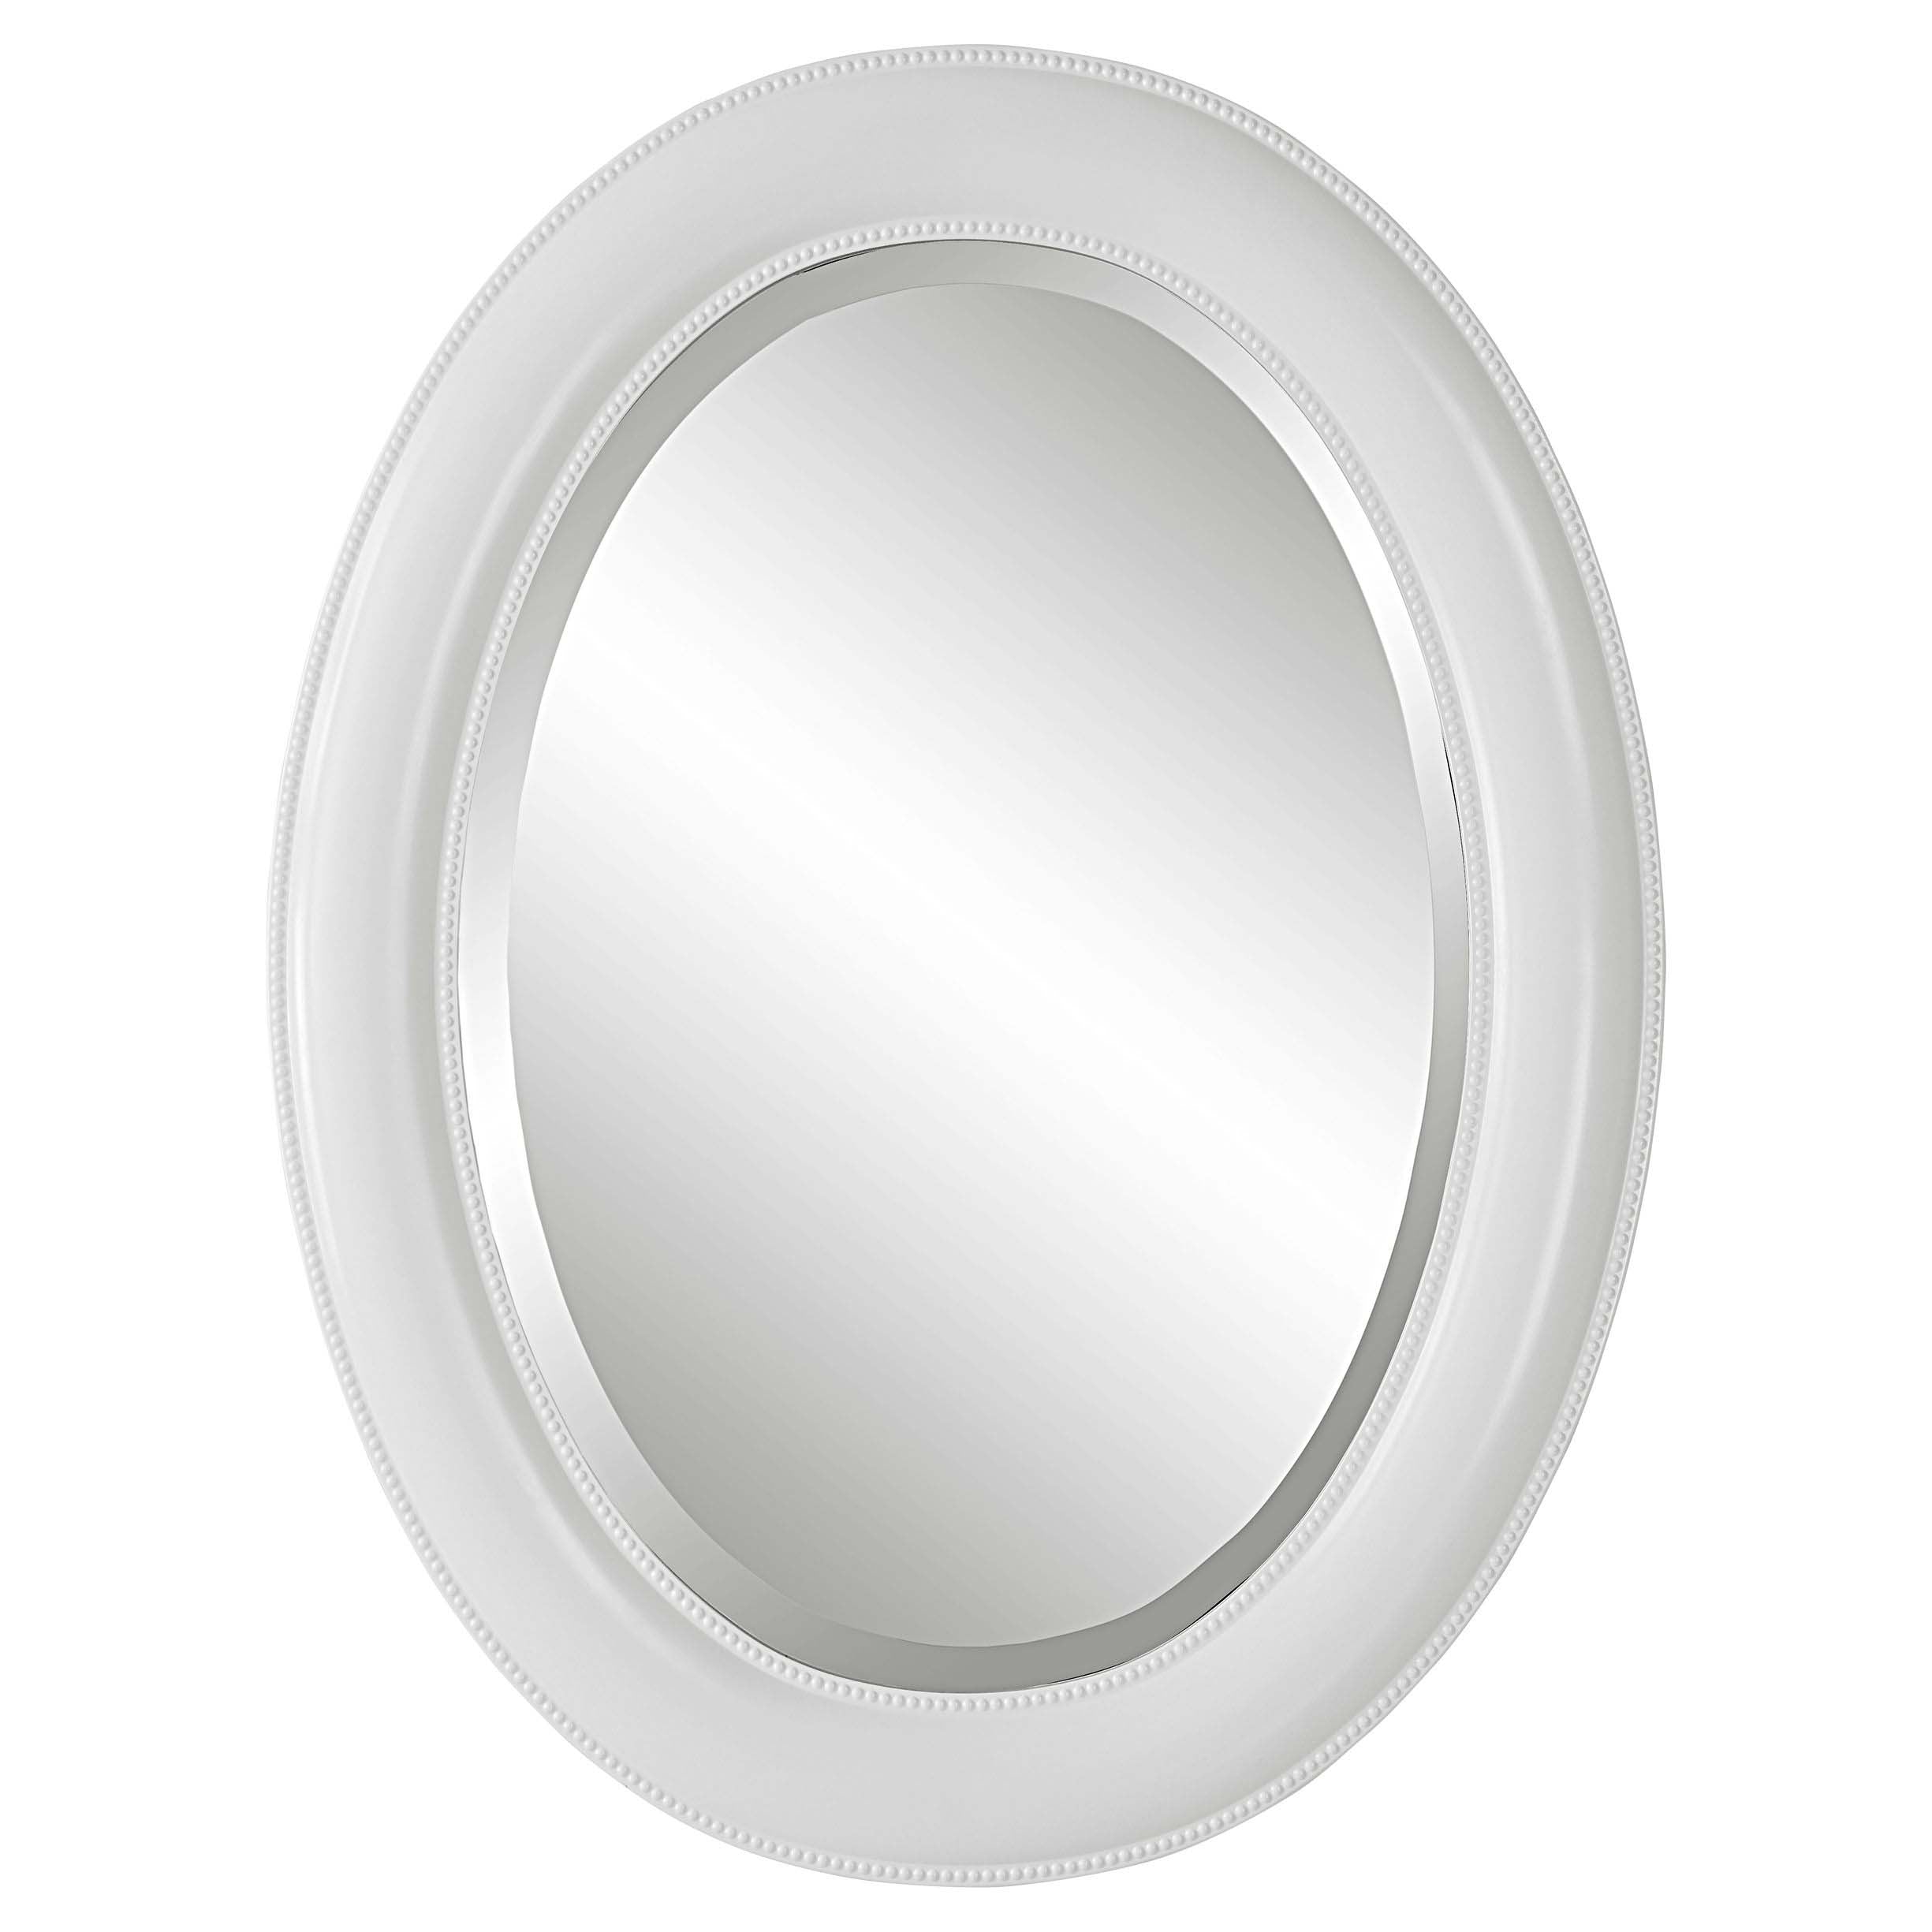 Decor Market Mirror - Crisp White Finish